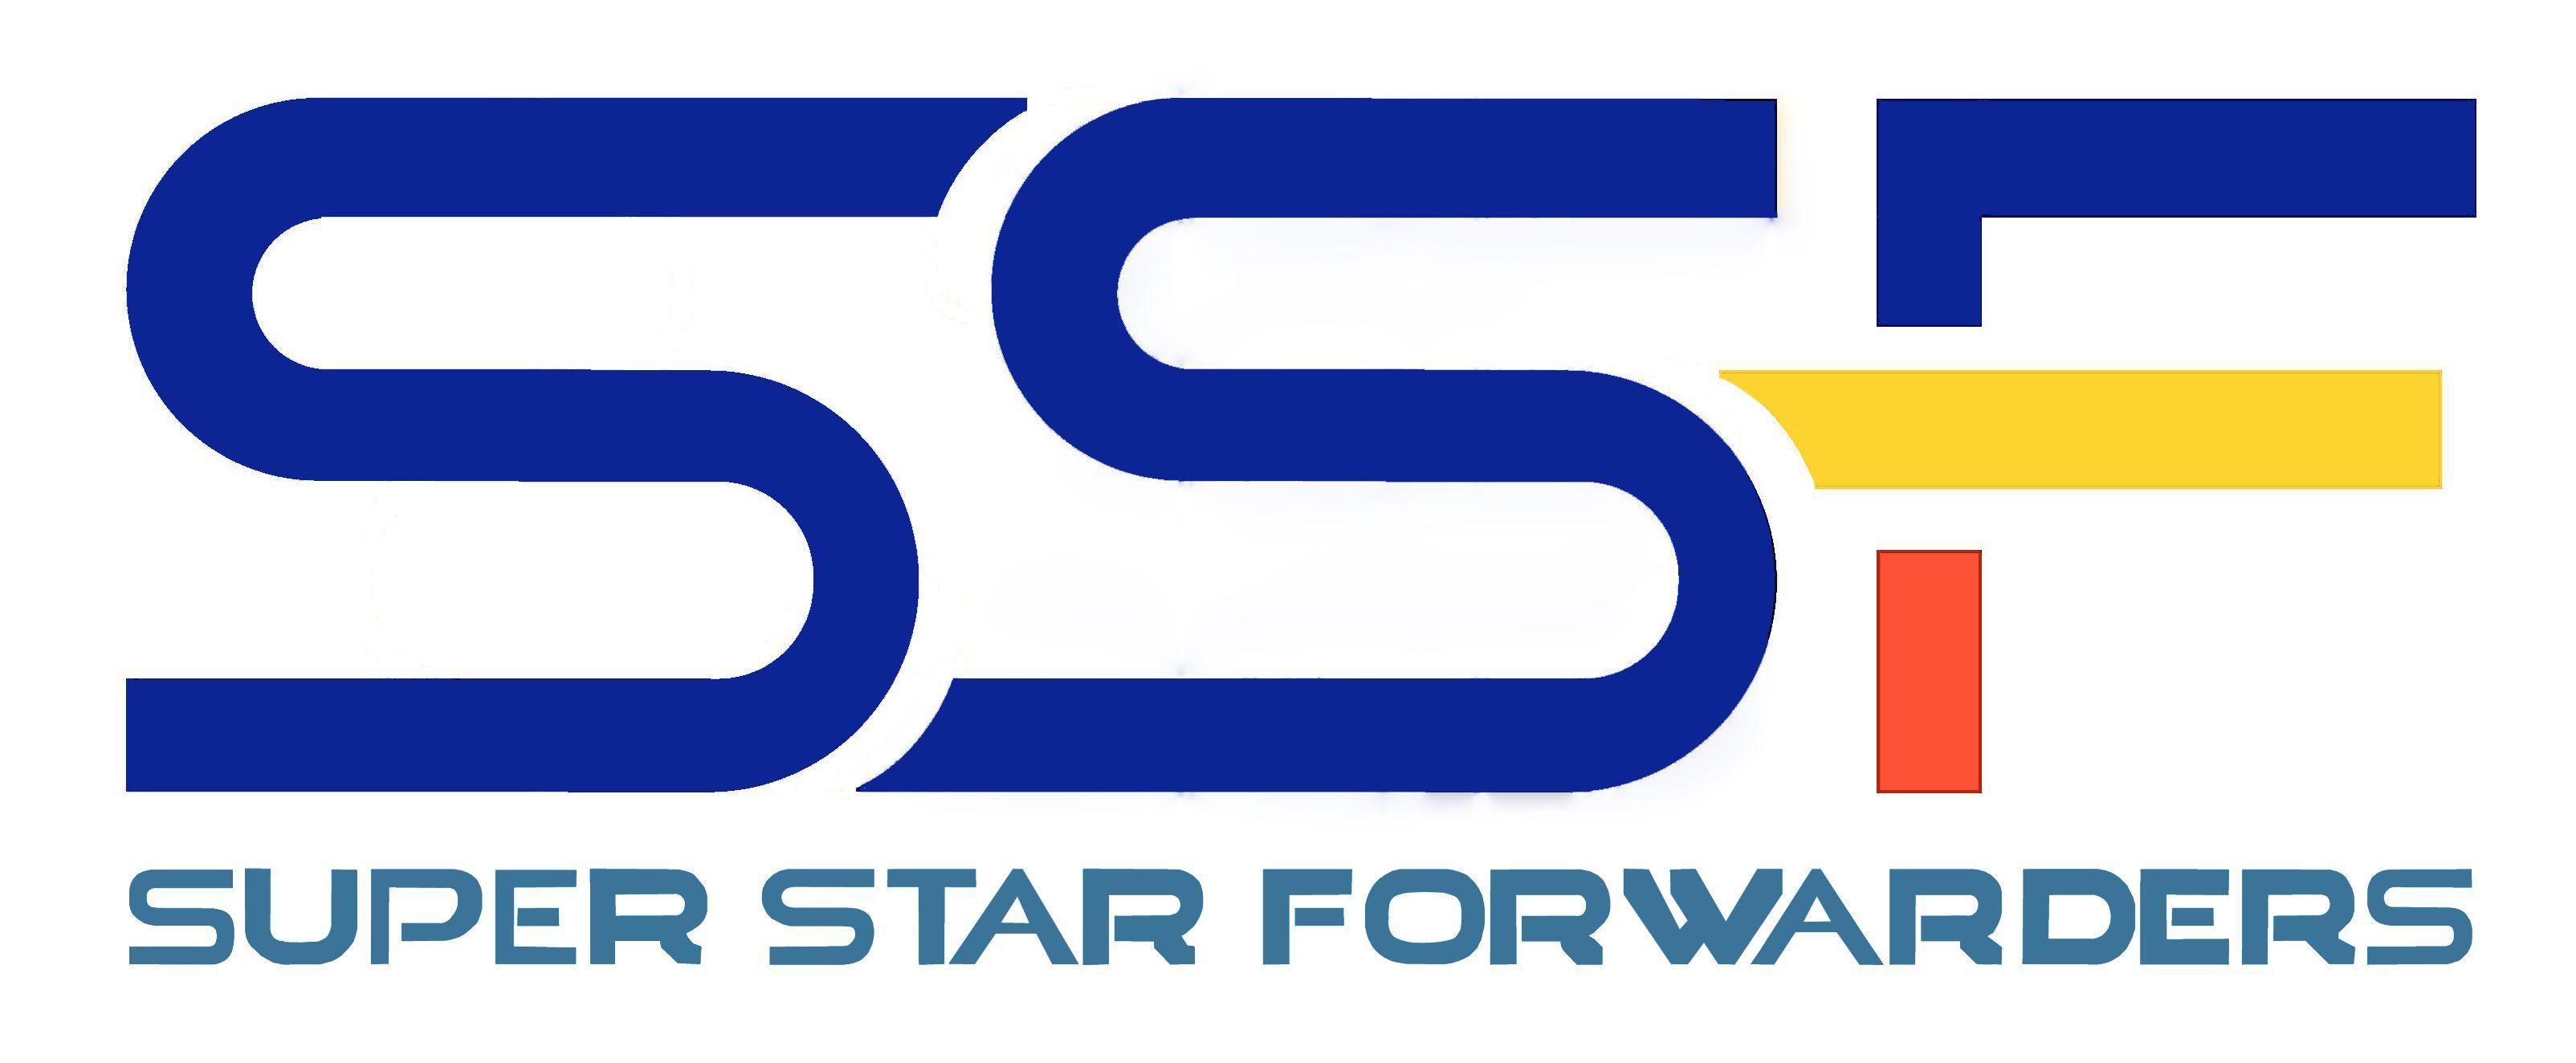 SSF Logo - Super Star Forwarders | Case Studies | MiX Telematics